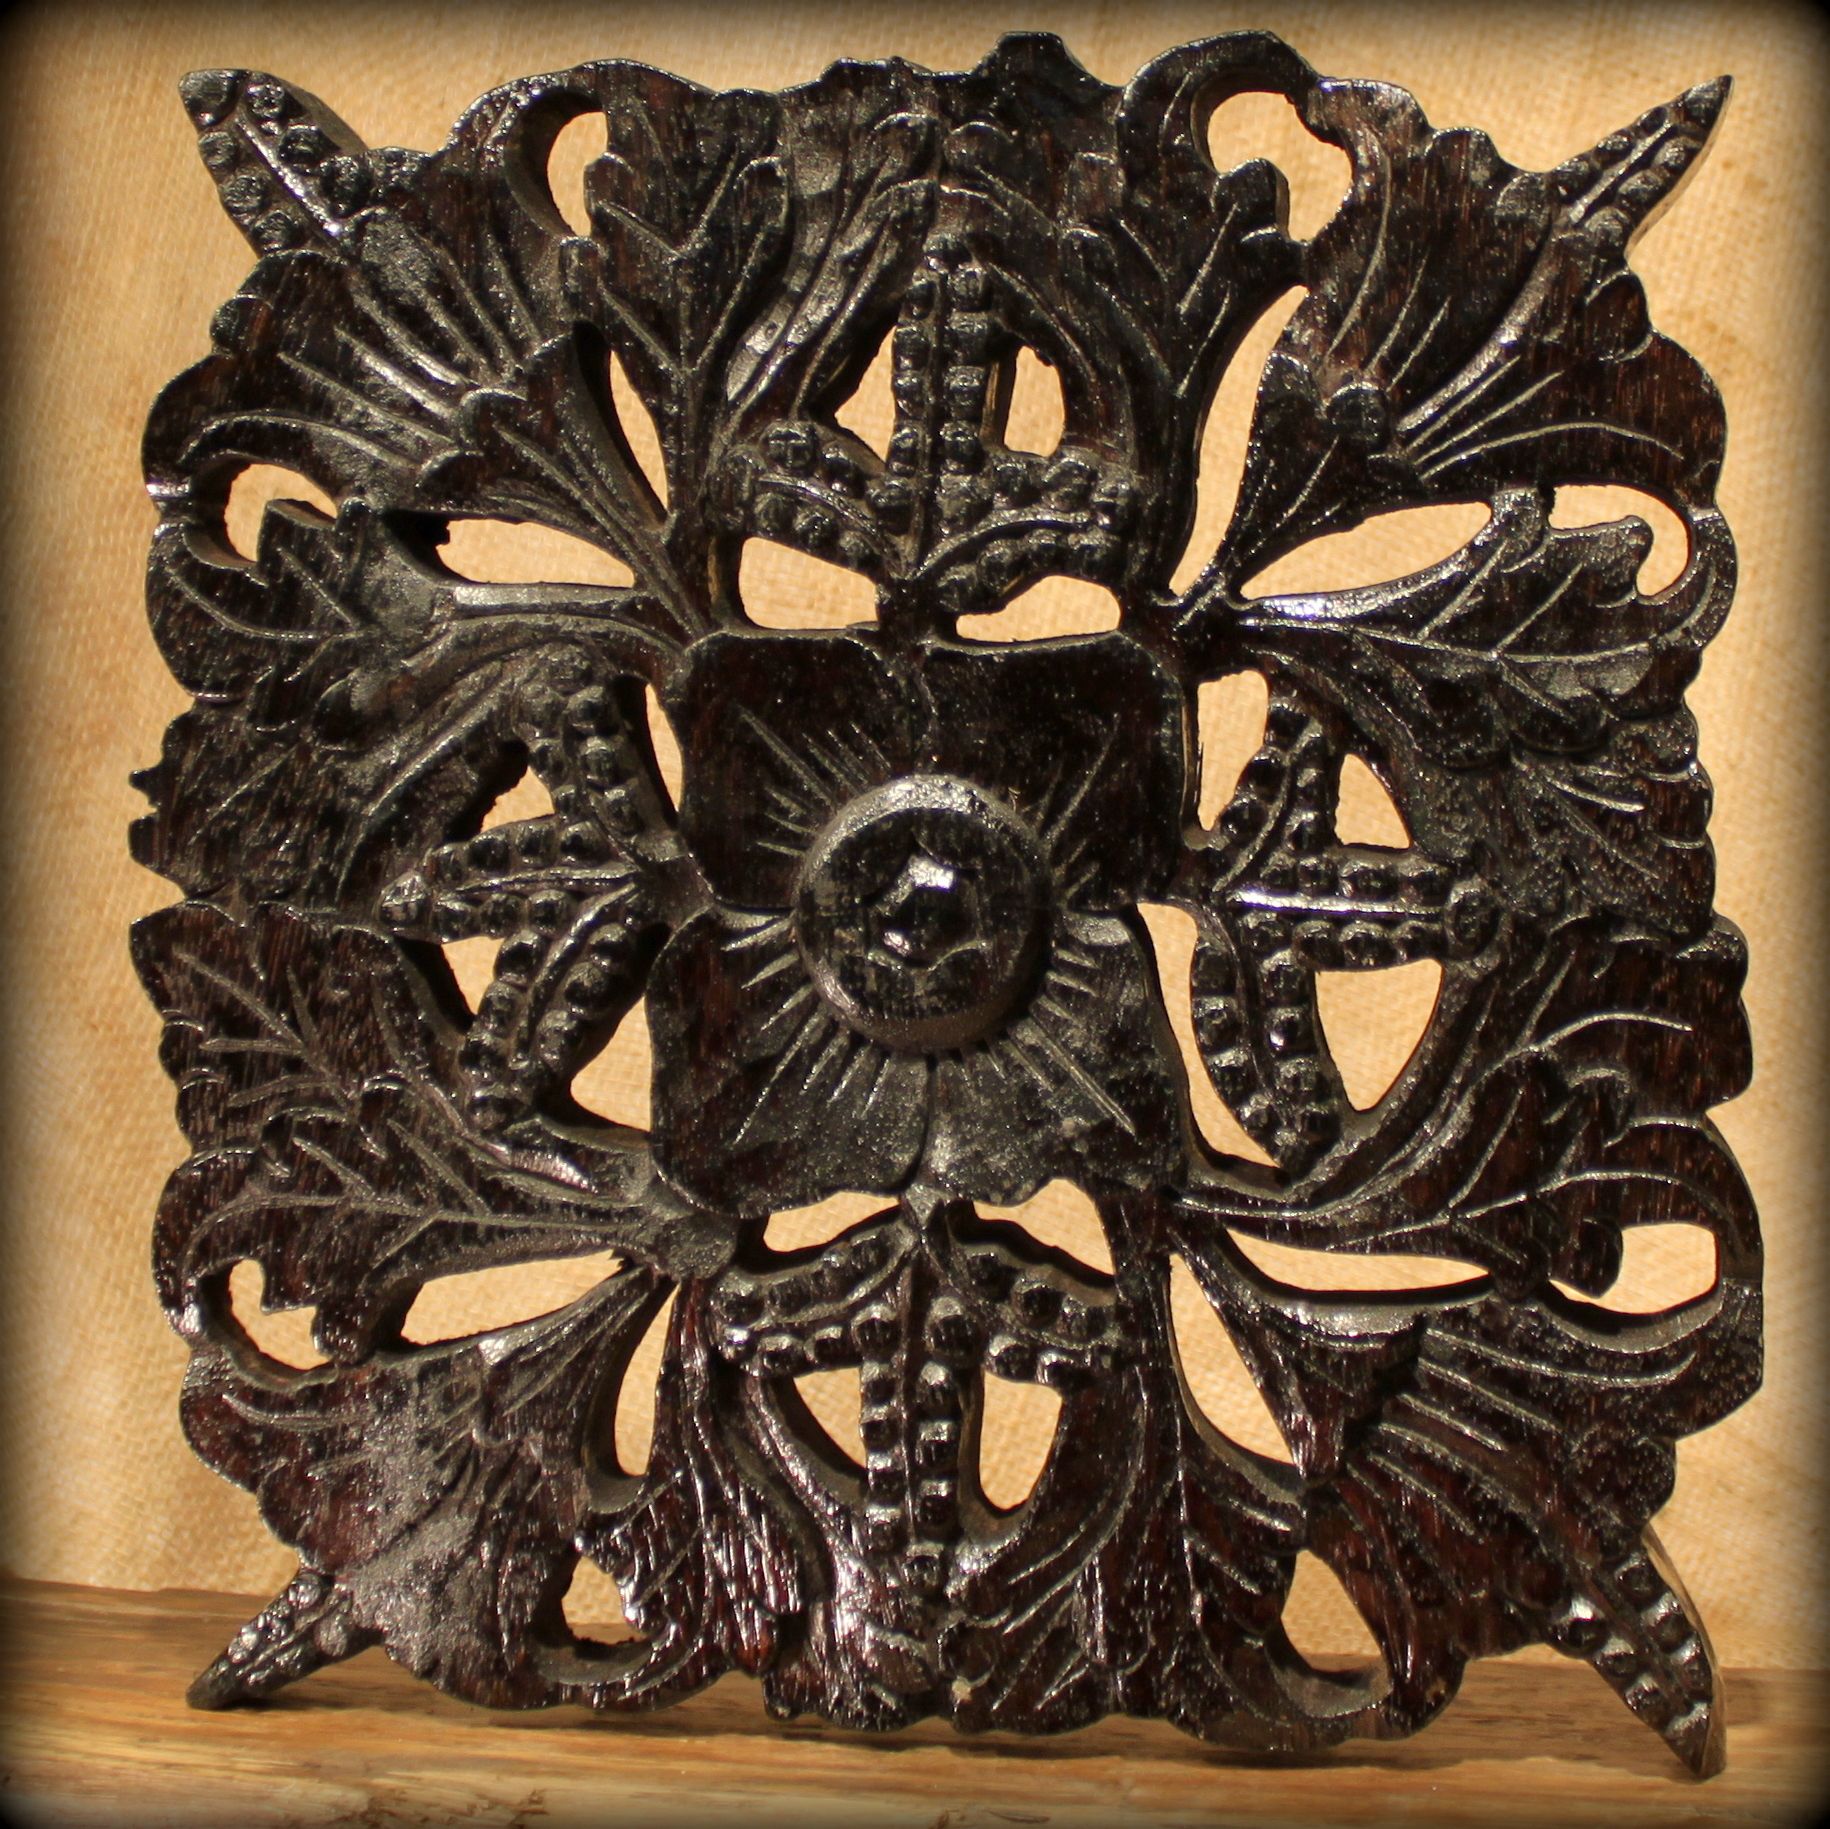 Carved Wood Art - Kauai's Mokihana Berry. These beautiful carvings ...